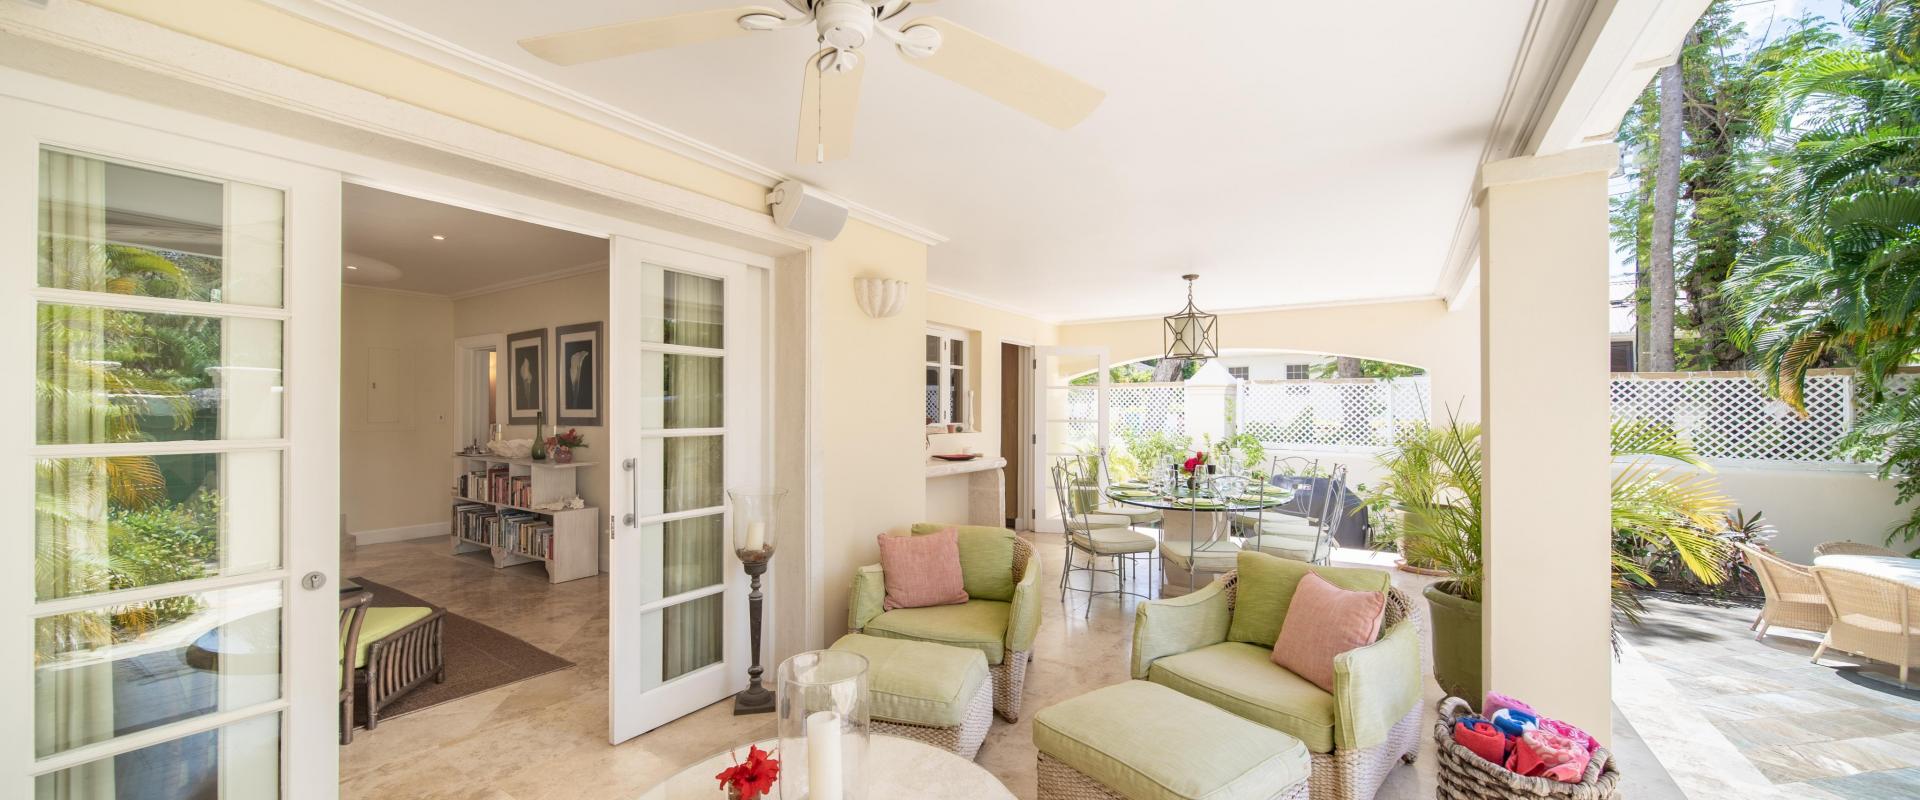 Coco Mullins Barbados Holiday Rental Home Exterior Dining